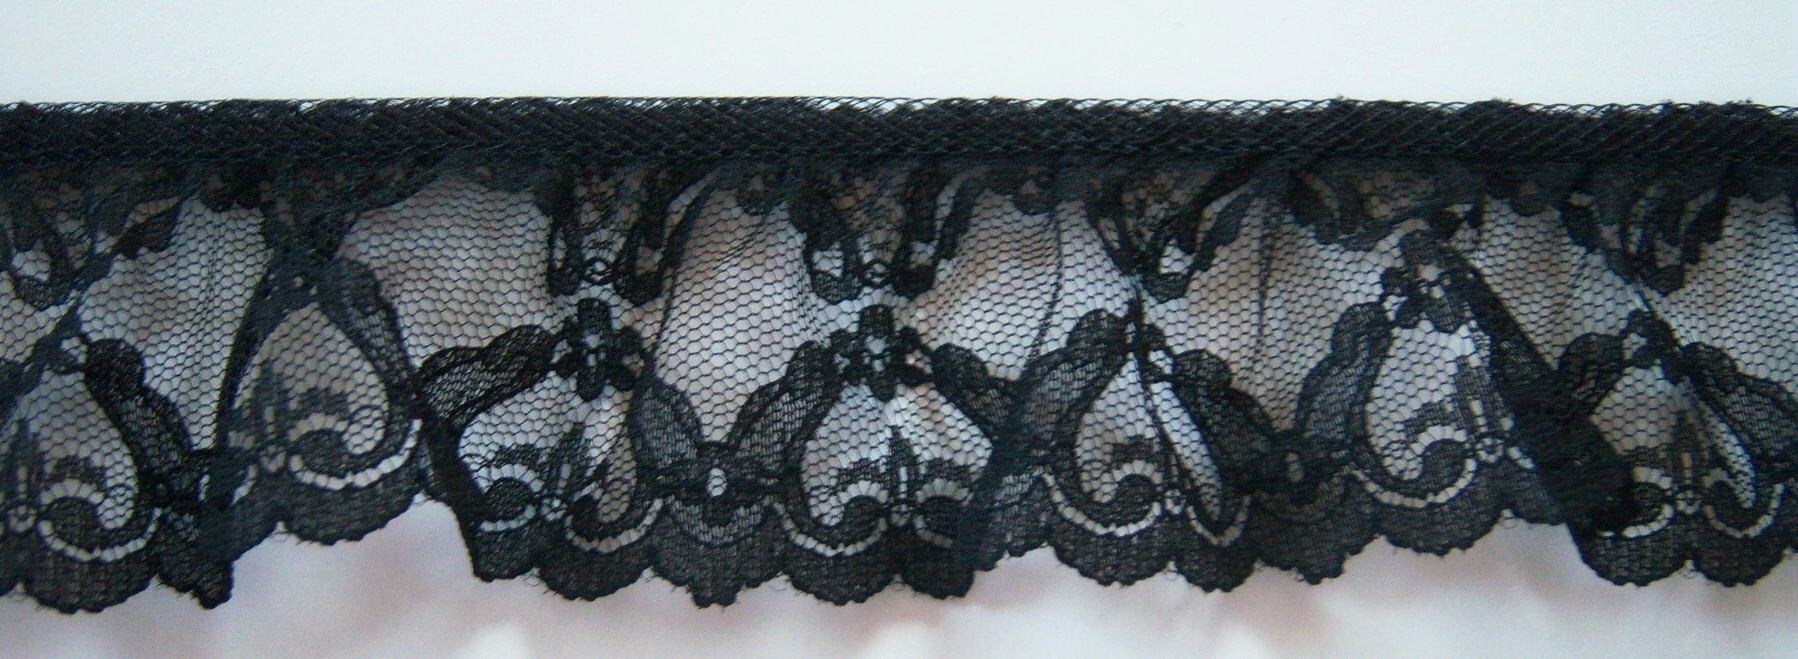 Black 1 3/4" Ruffled Lace